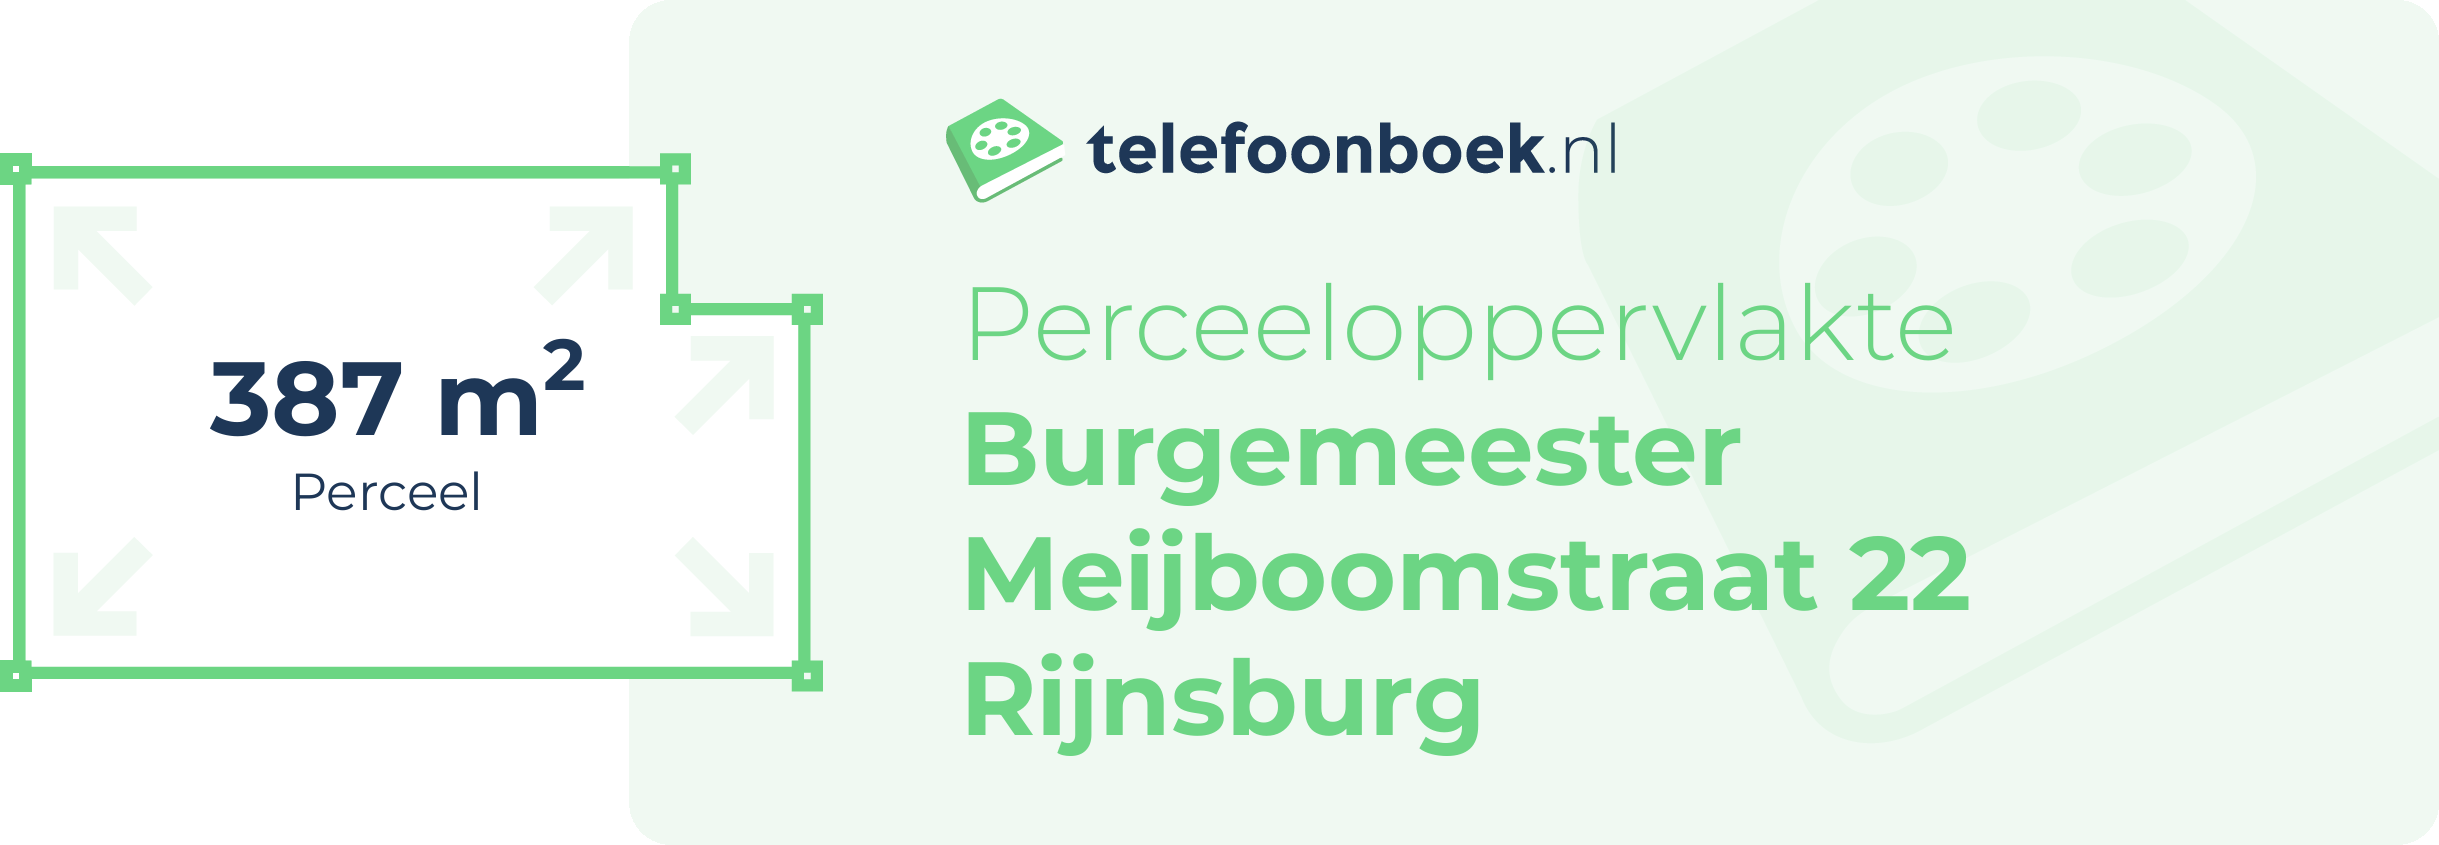 Perceeloppervlakte Burgemeester Meijboomstraat 22 Rijnsburg